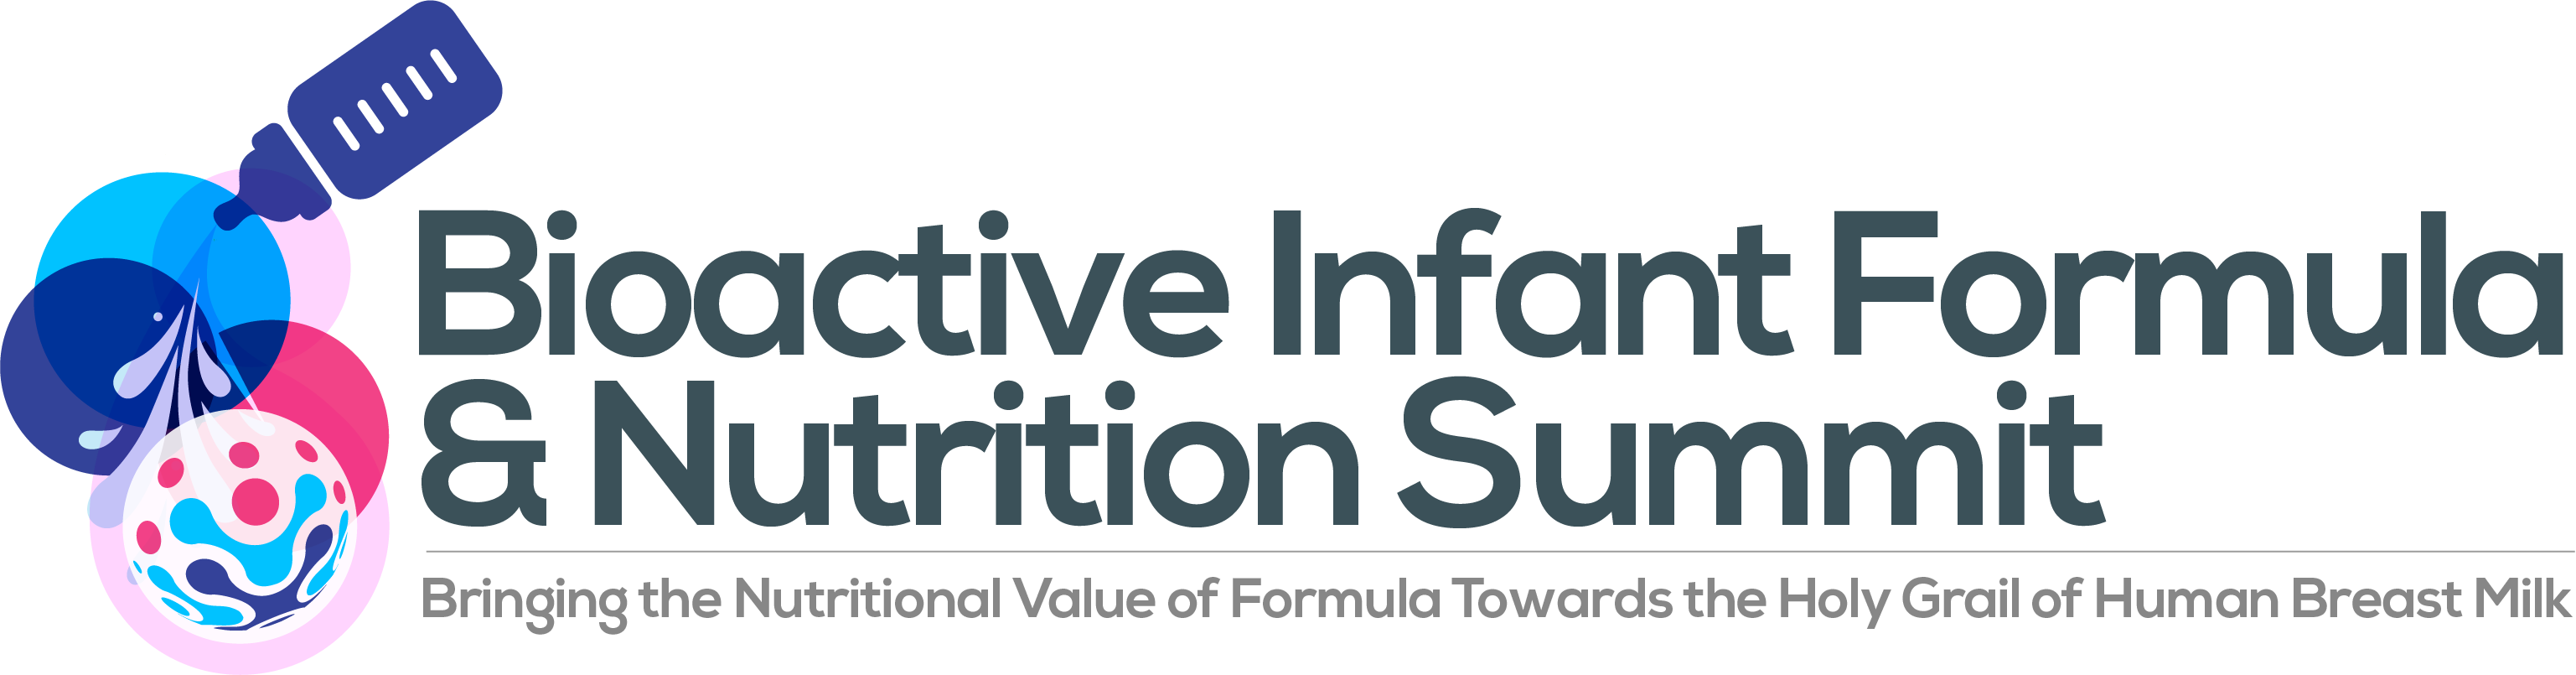 Bioactive Infant Formula & Nutrition, Hanson Wade